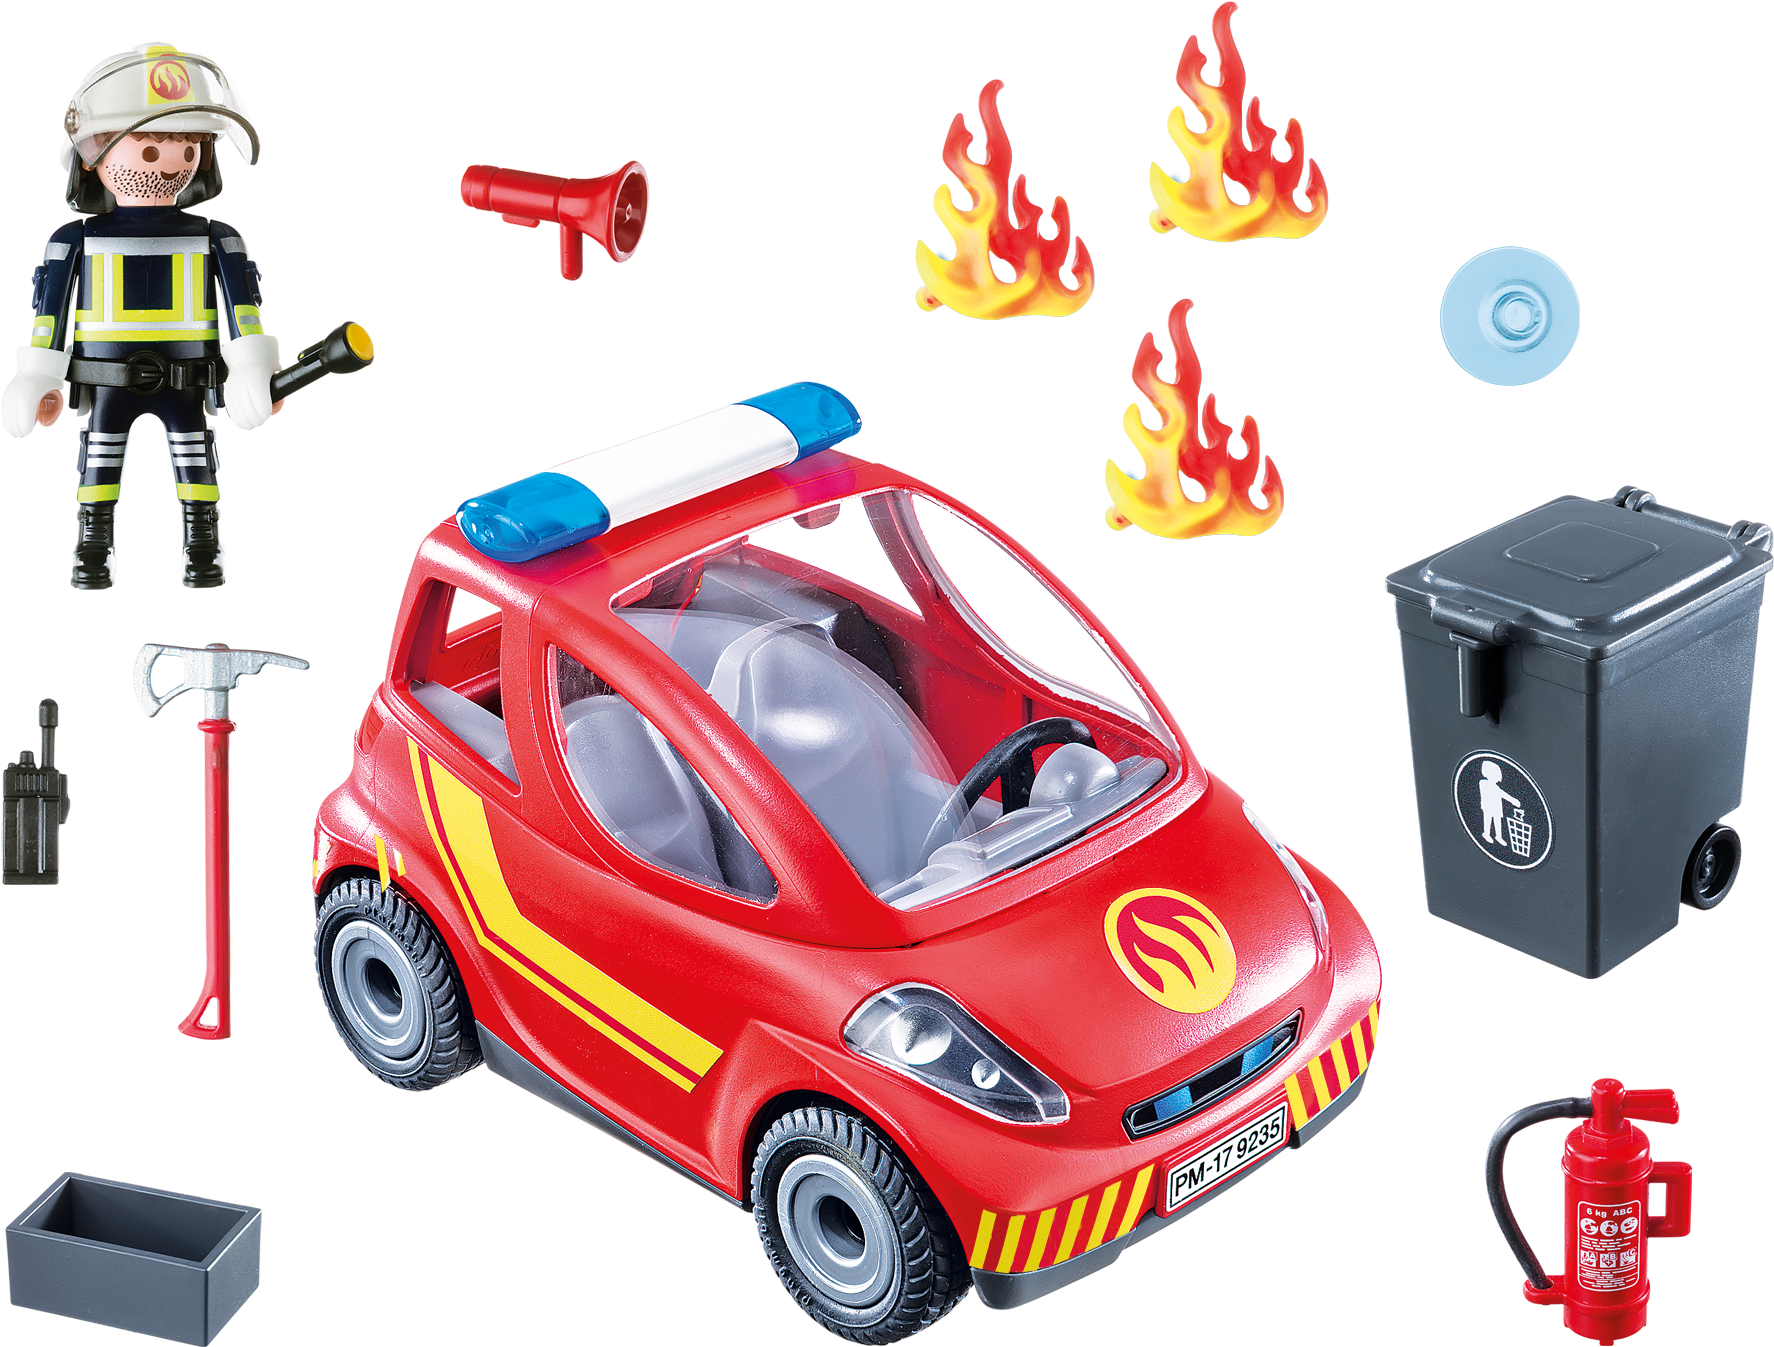 Http - //media - Playmobil - Com/i/playmobil/9235 Product - Playmobil 9235 Firefighter With Car (2000x1400)